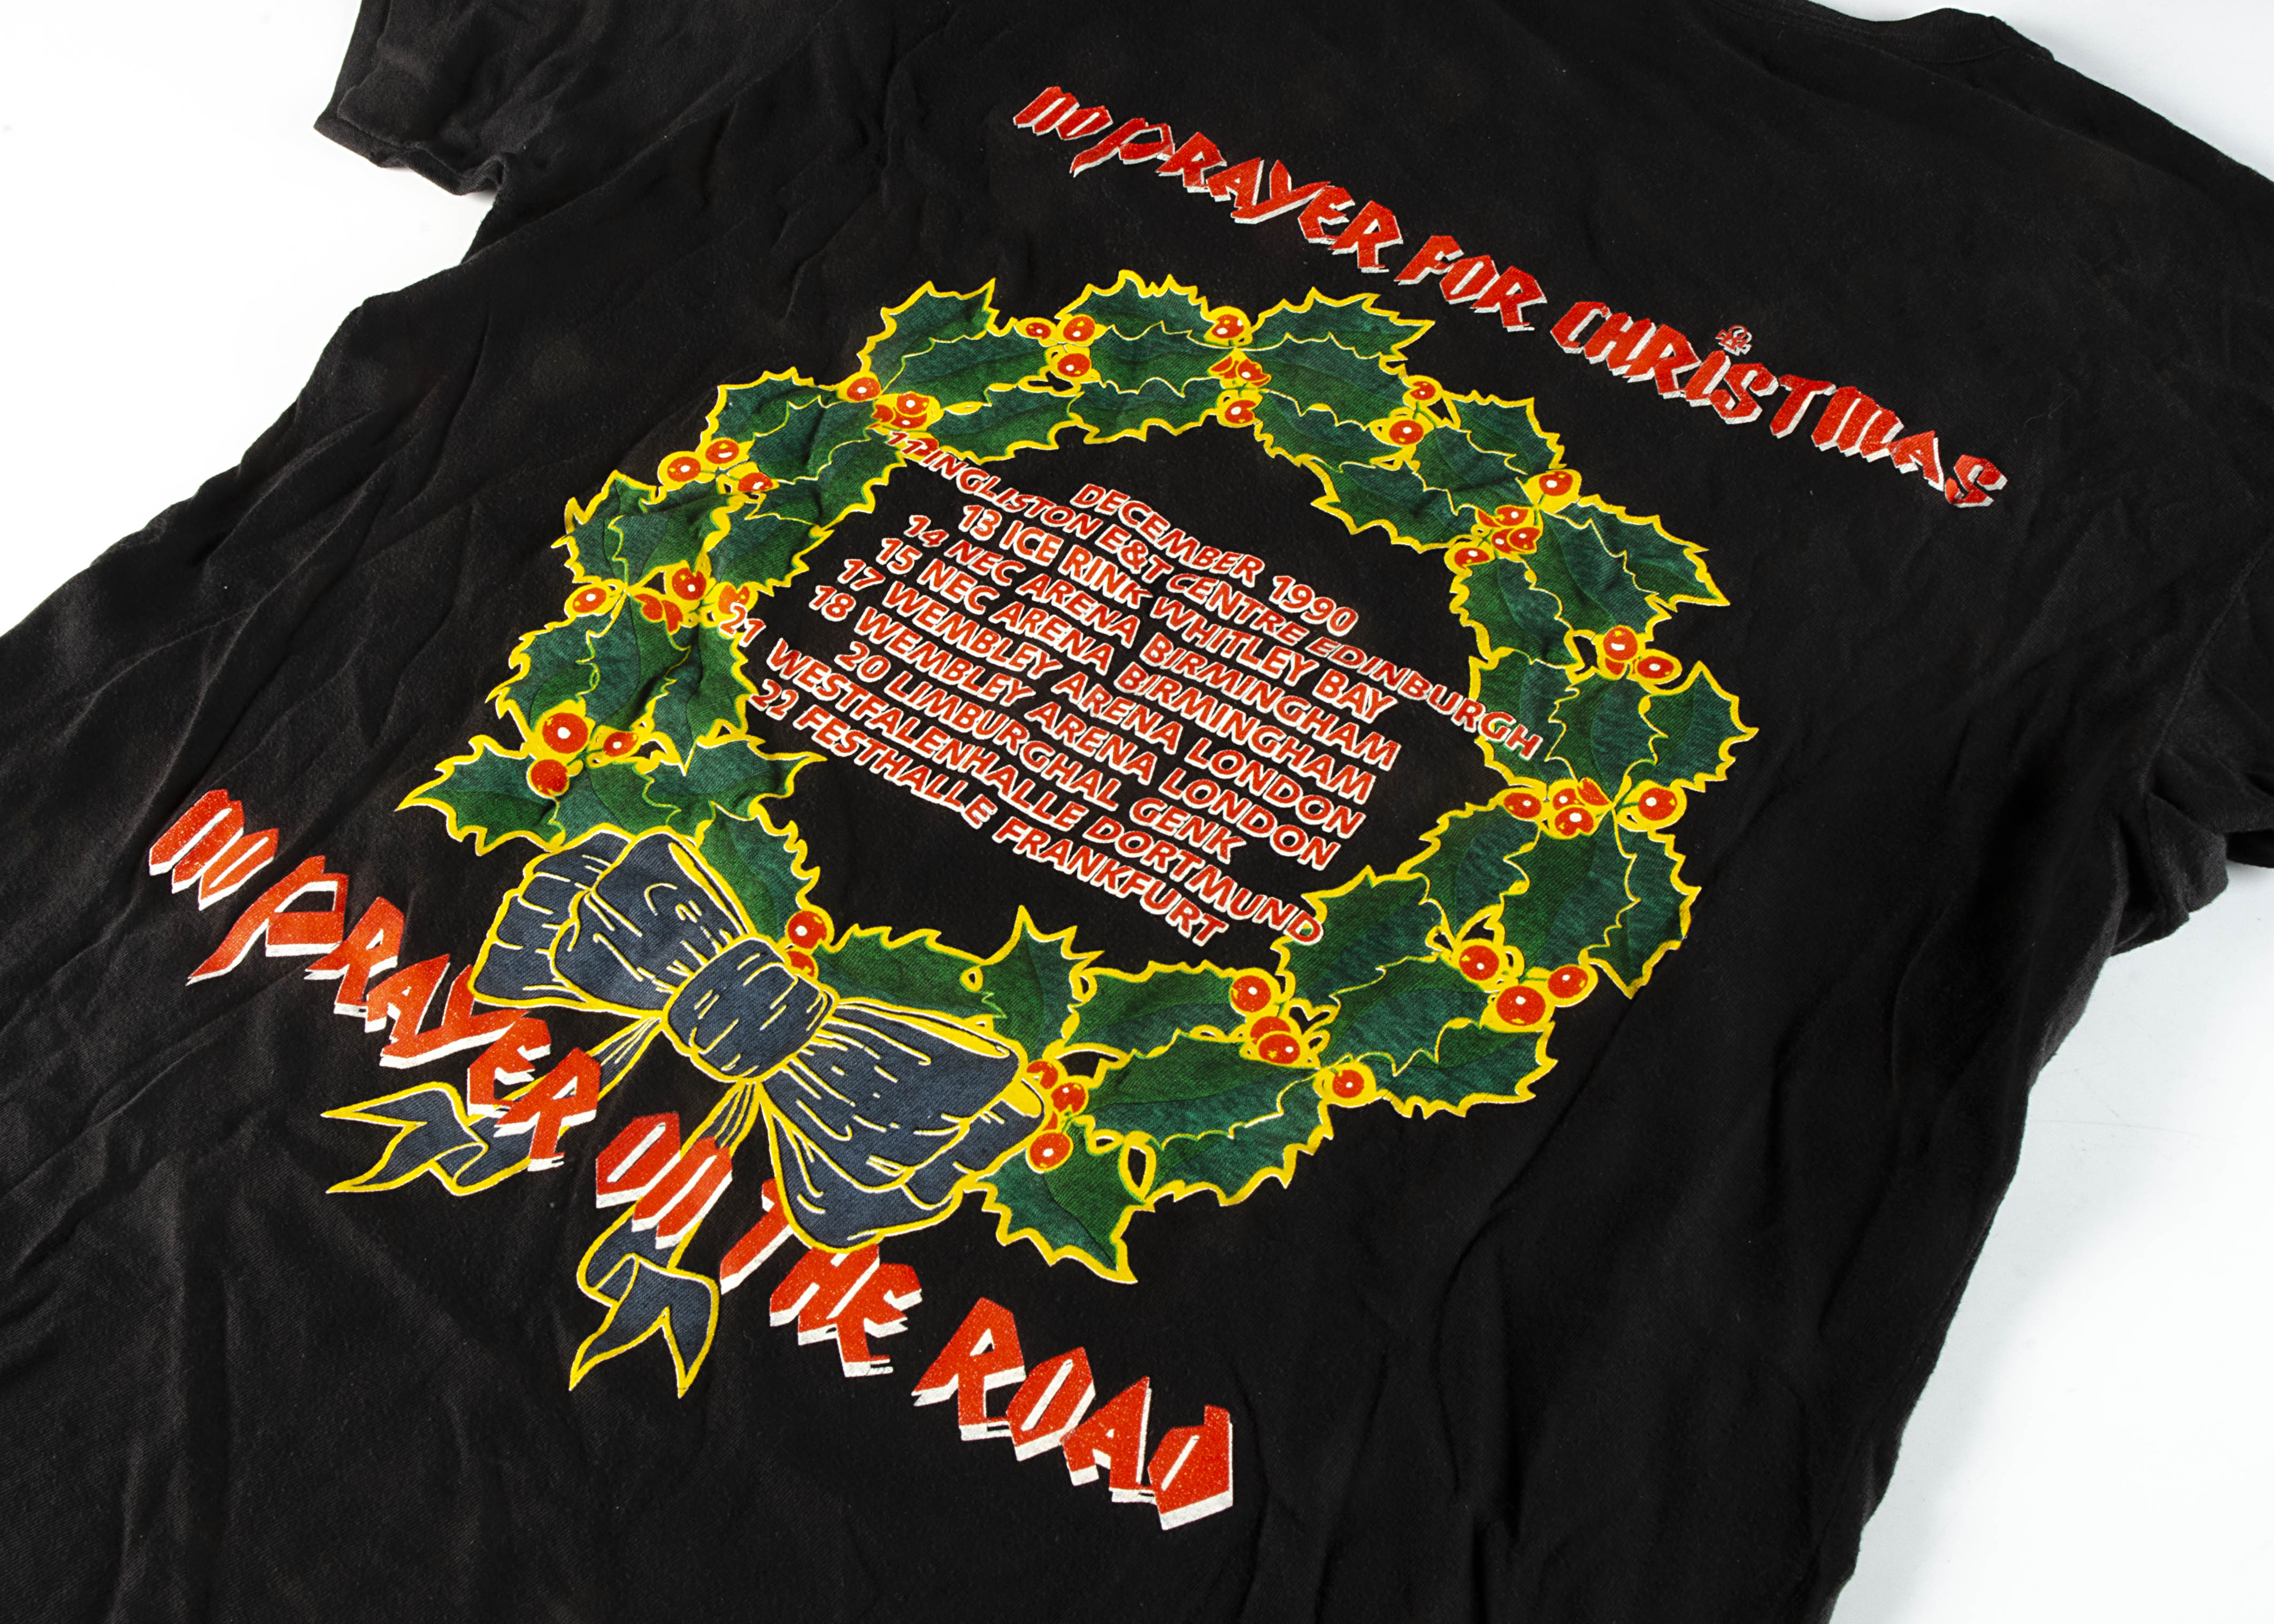 Iron Maiden 'No Prayer on the Road' 'T' Shirt, an Iron Maiden 'T' shirt 1990 'No Prayer on the Road' - Image 2 of 2